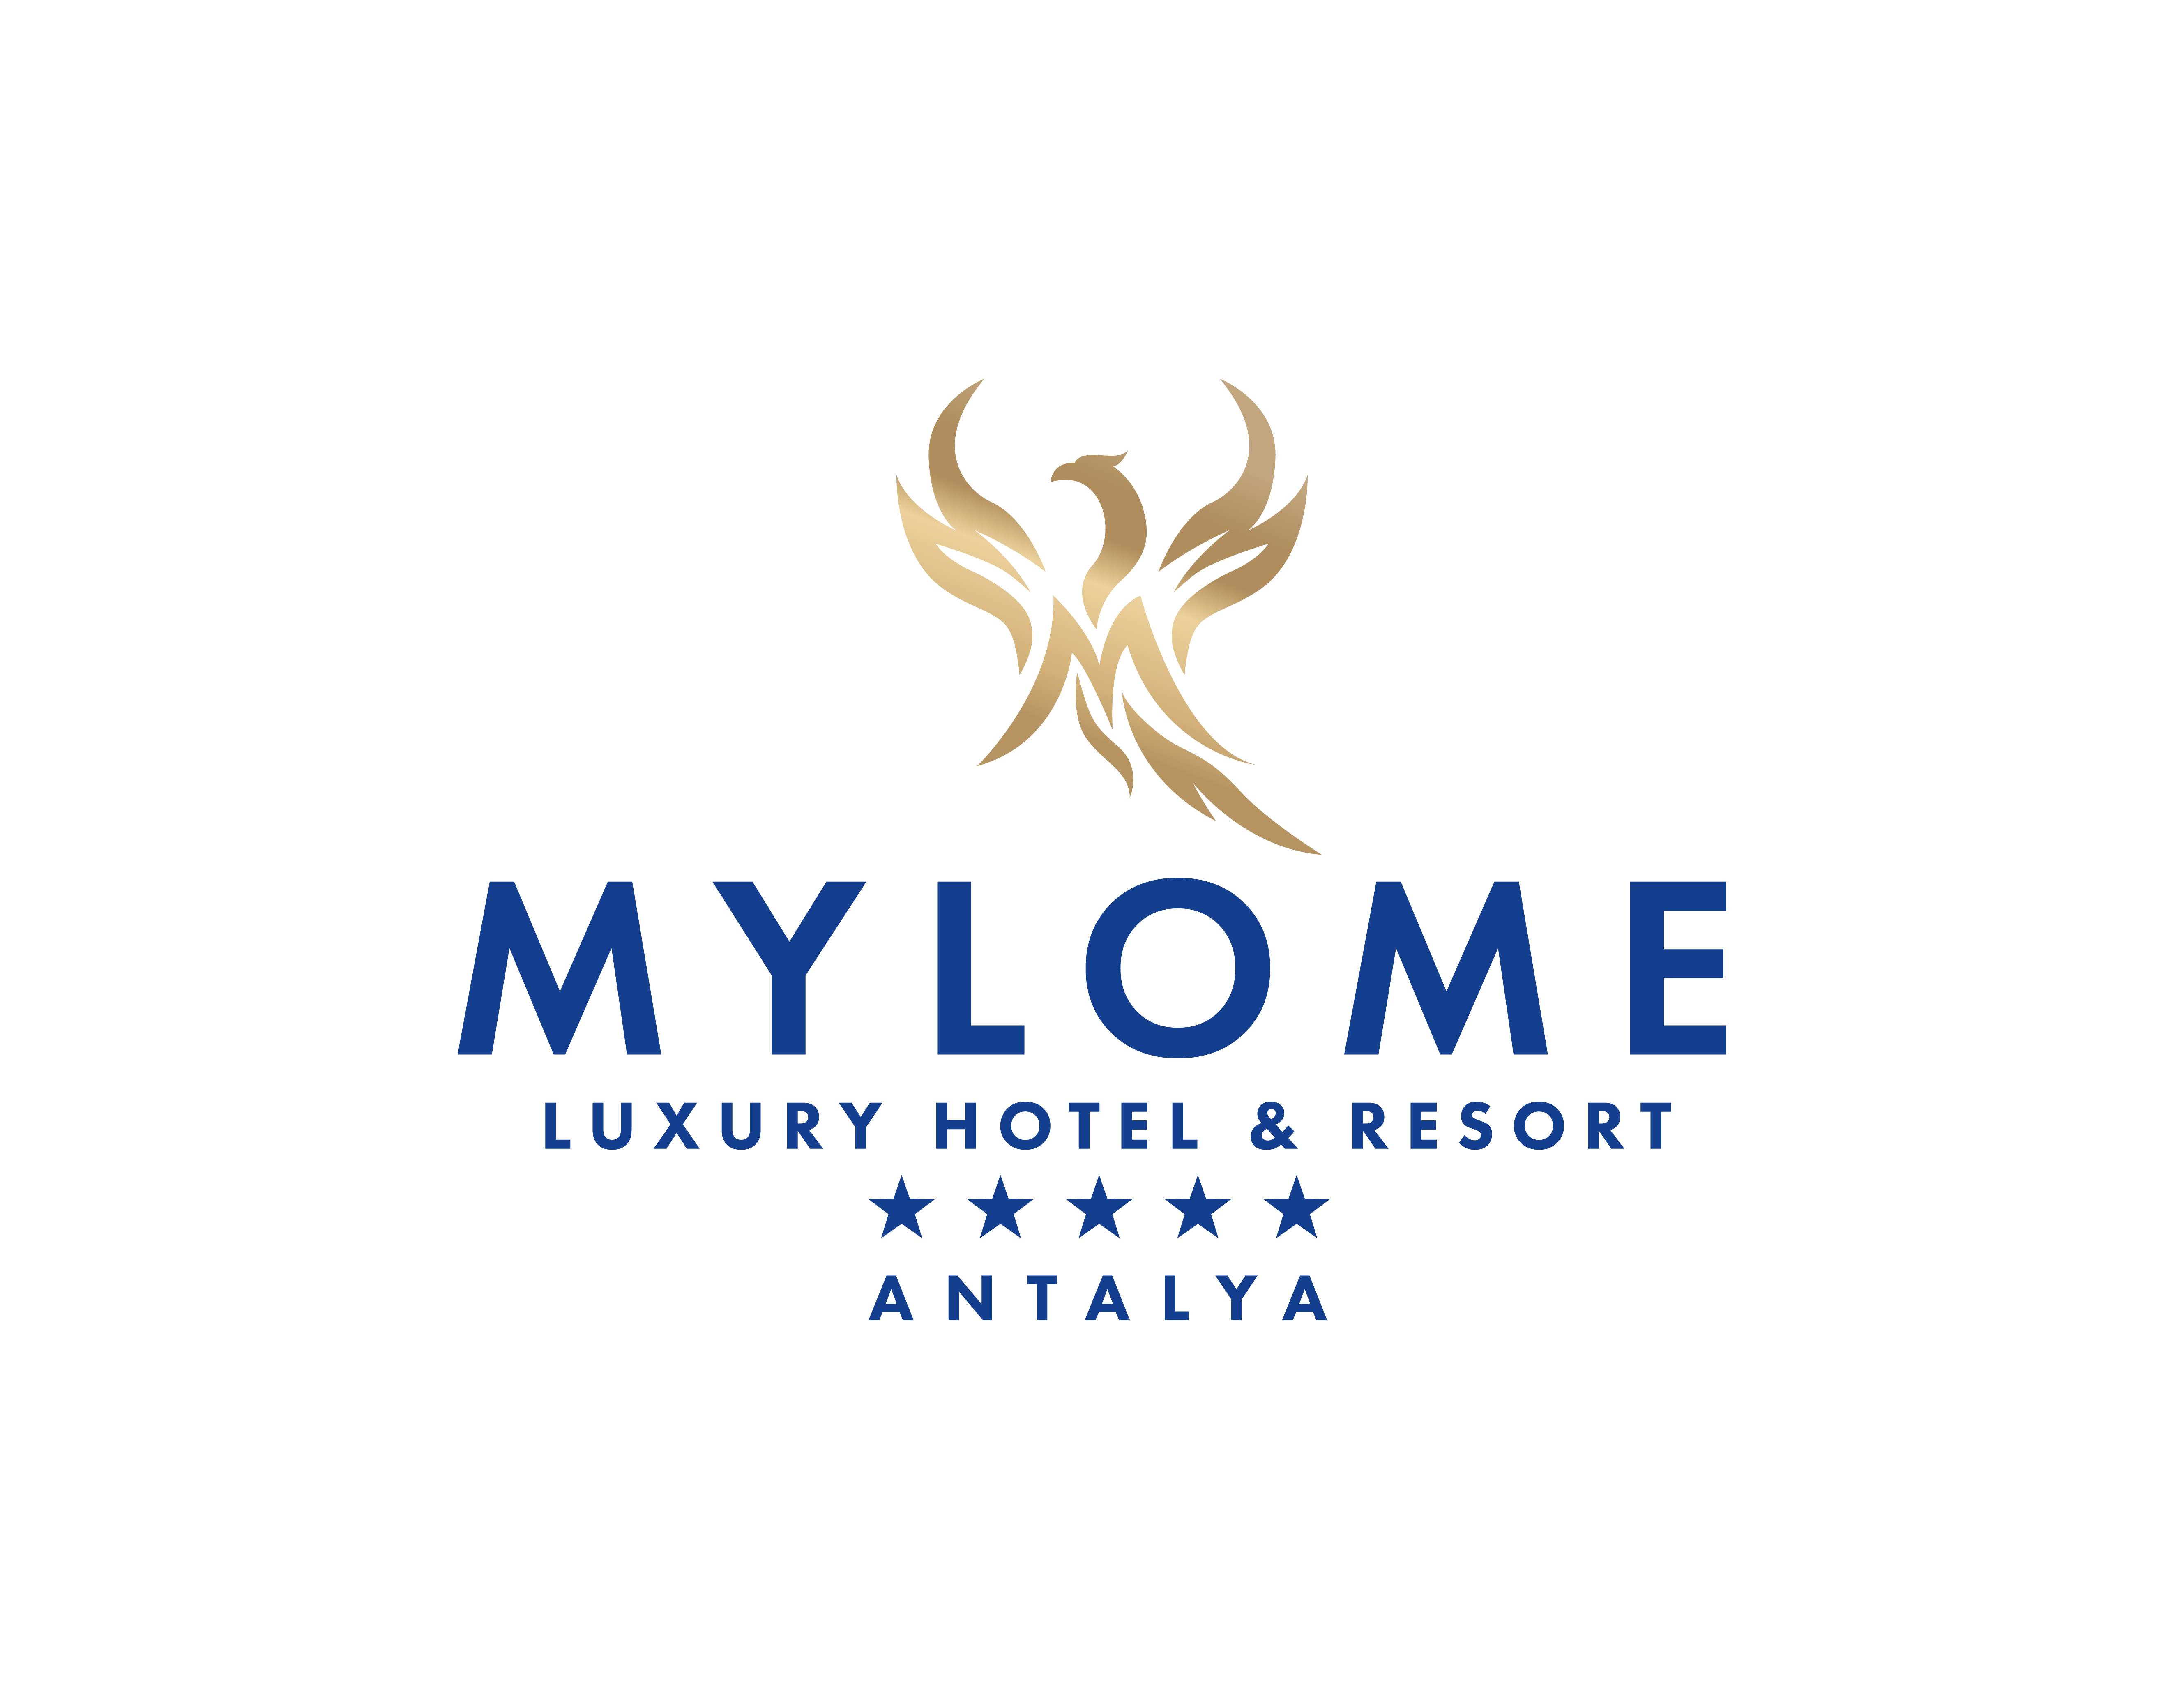 Mylome Hotels